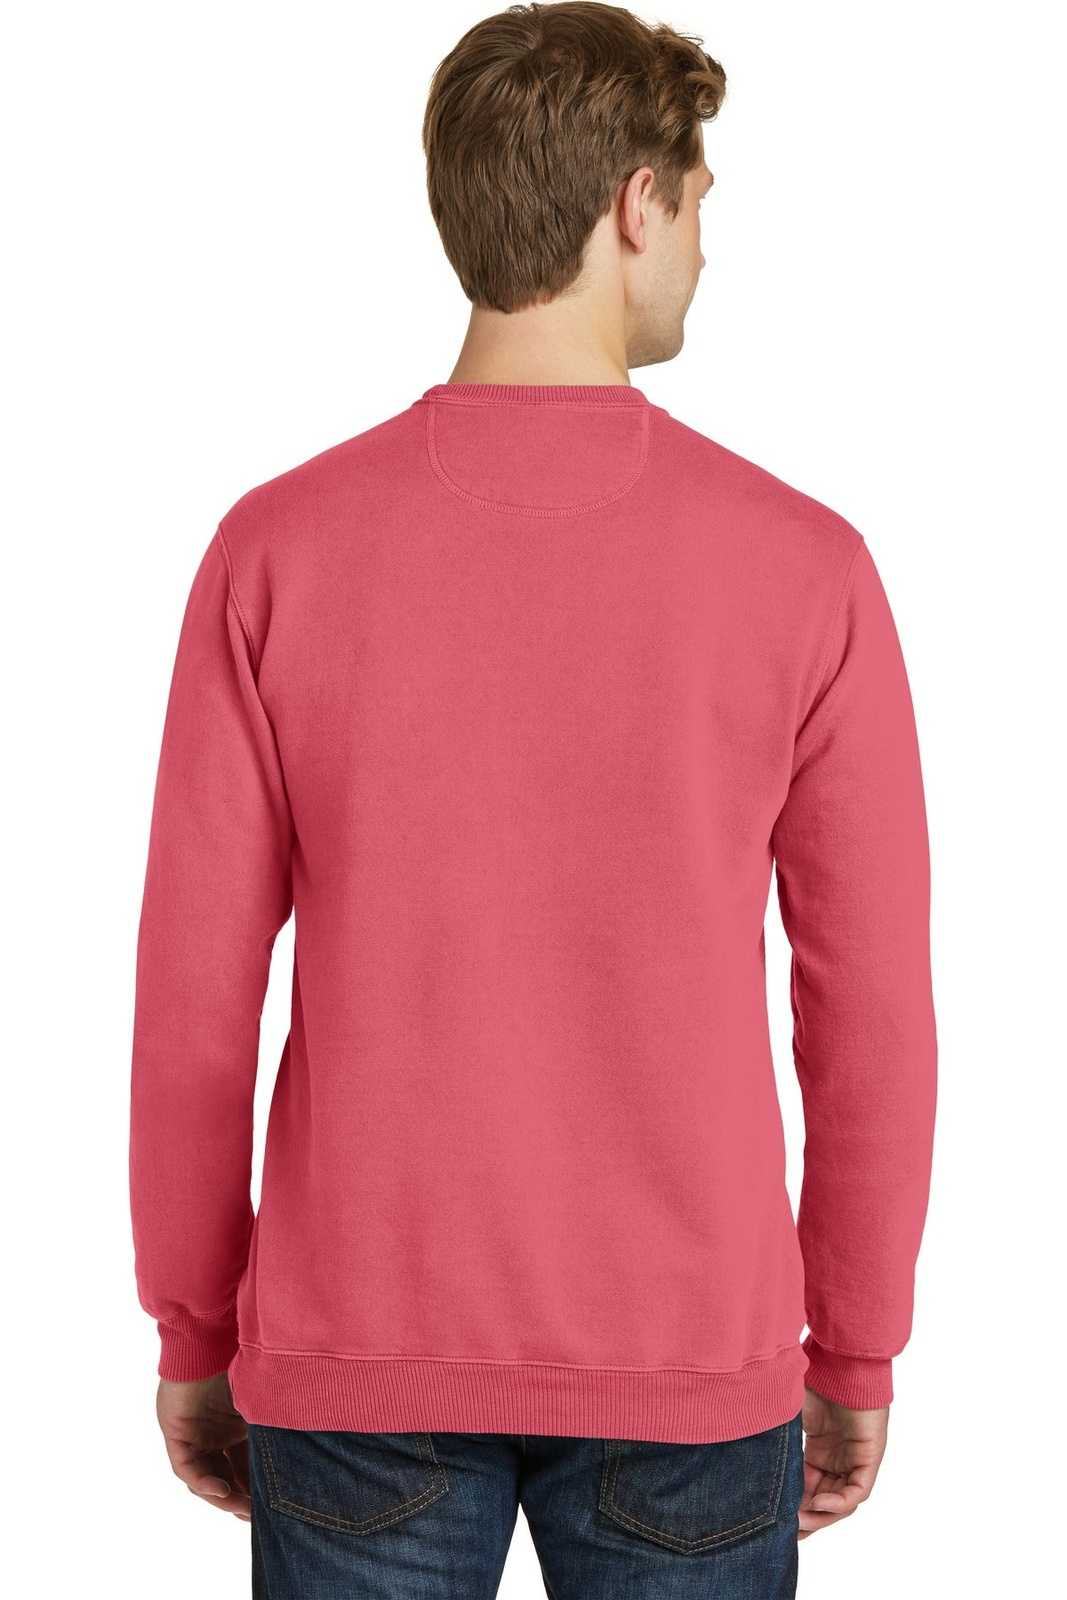 Port & Company PC098 Beach Wash Garment-Dyed Sweatshirt - Fruit Punch - HIT a Double - 1